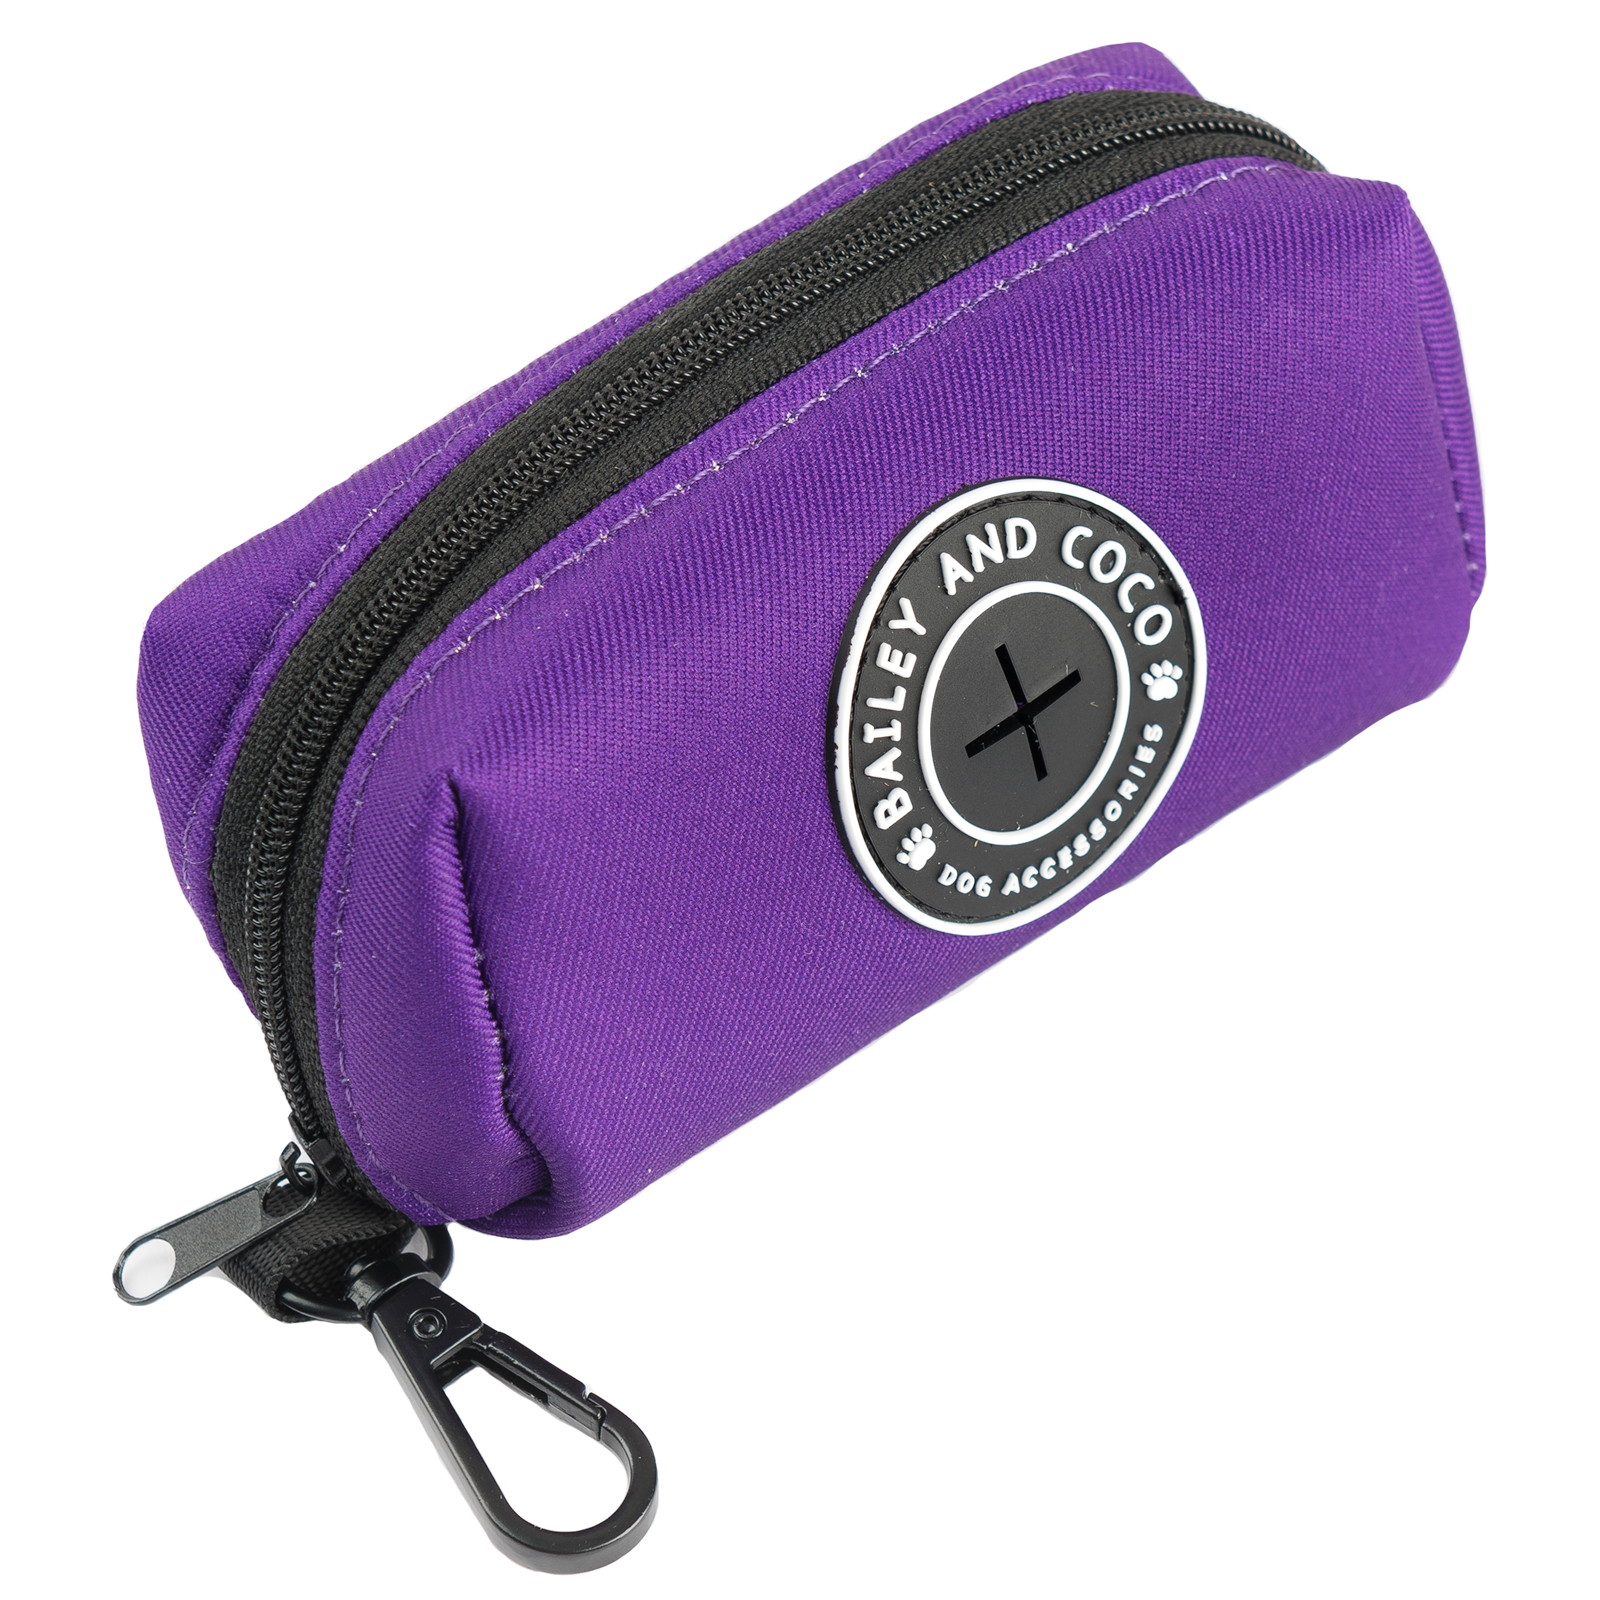 Poo Bag Holder - The Royal Purple One.